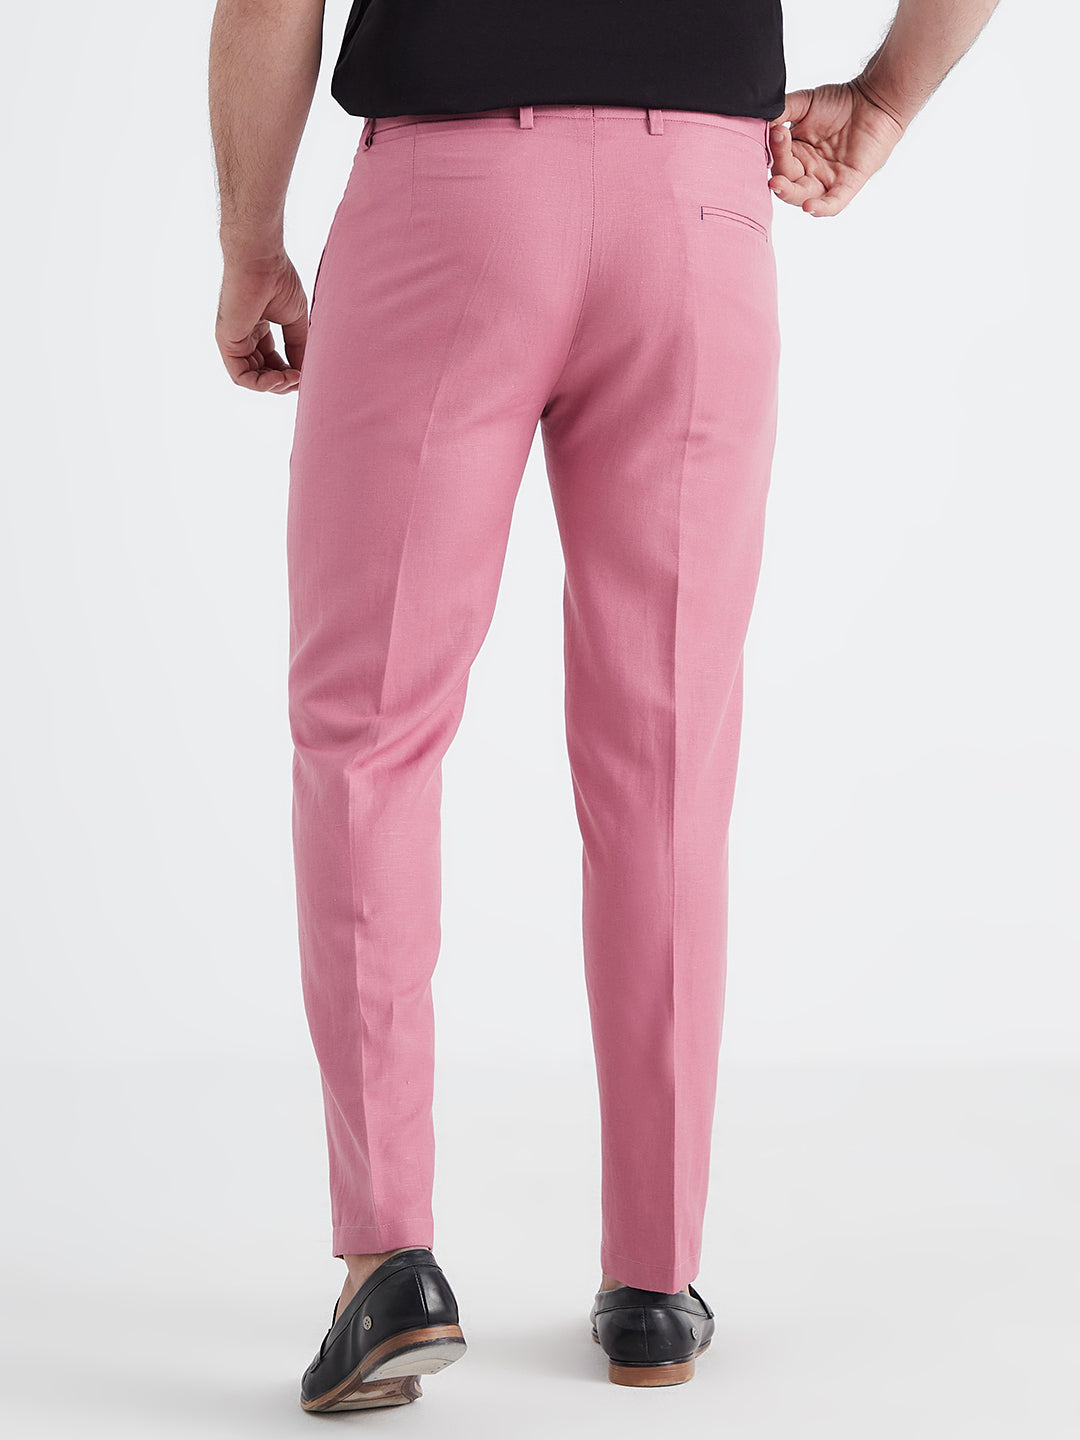 K & P Men`s Casual Slim Fit Ankle Length Pink Trouser Pant